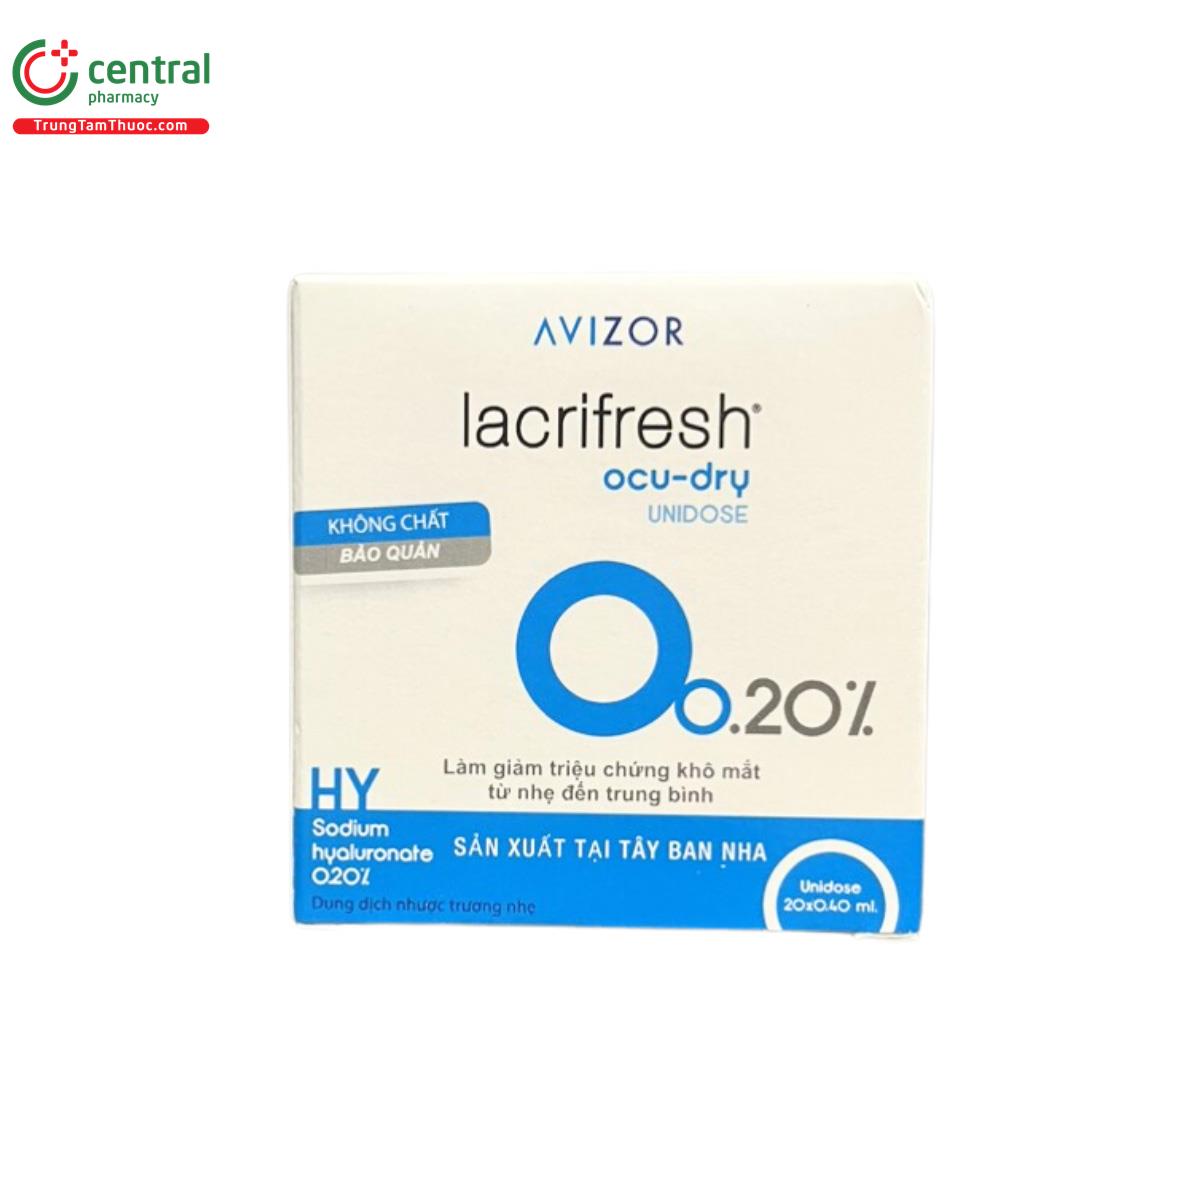 Avizor Lacrifresh ocu-dry 0.2%